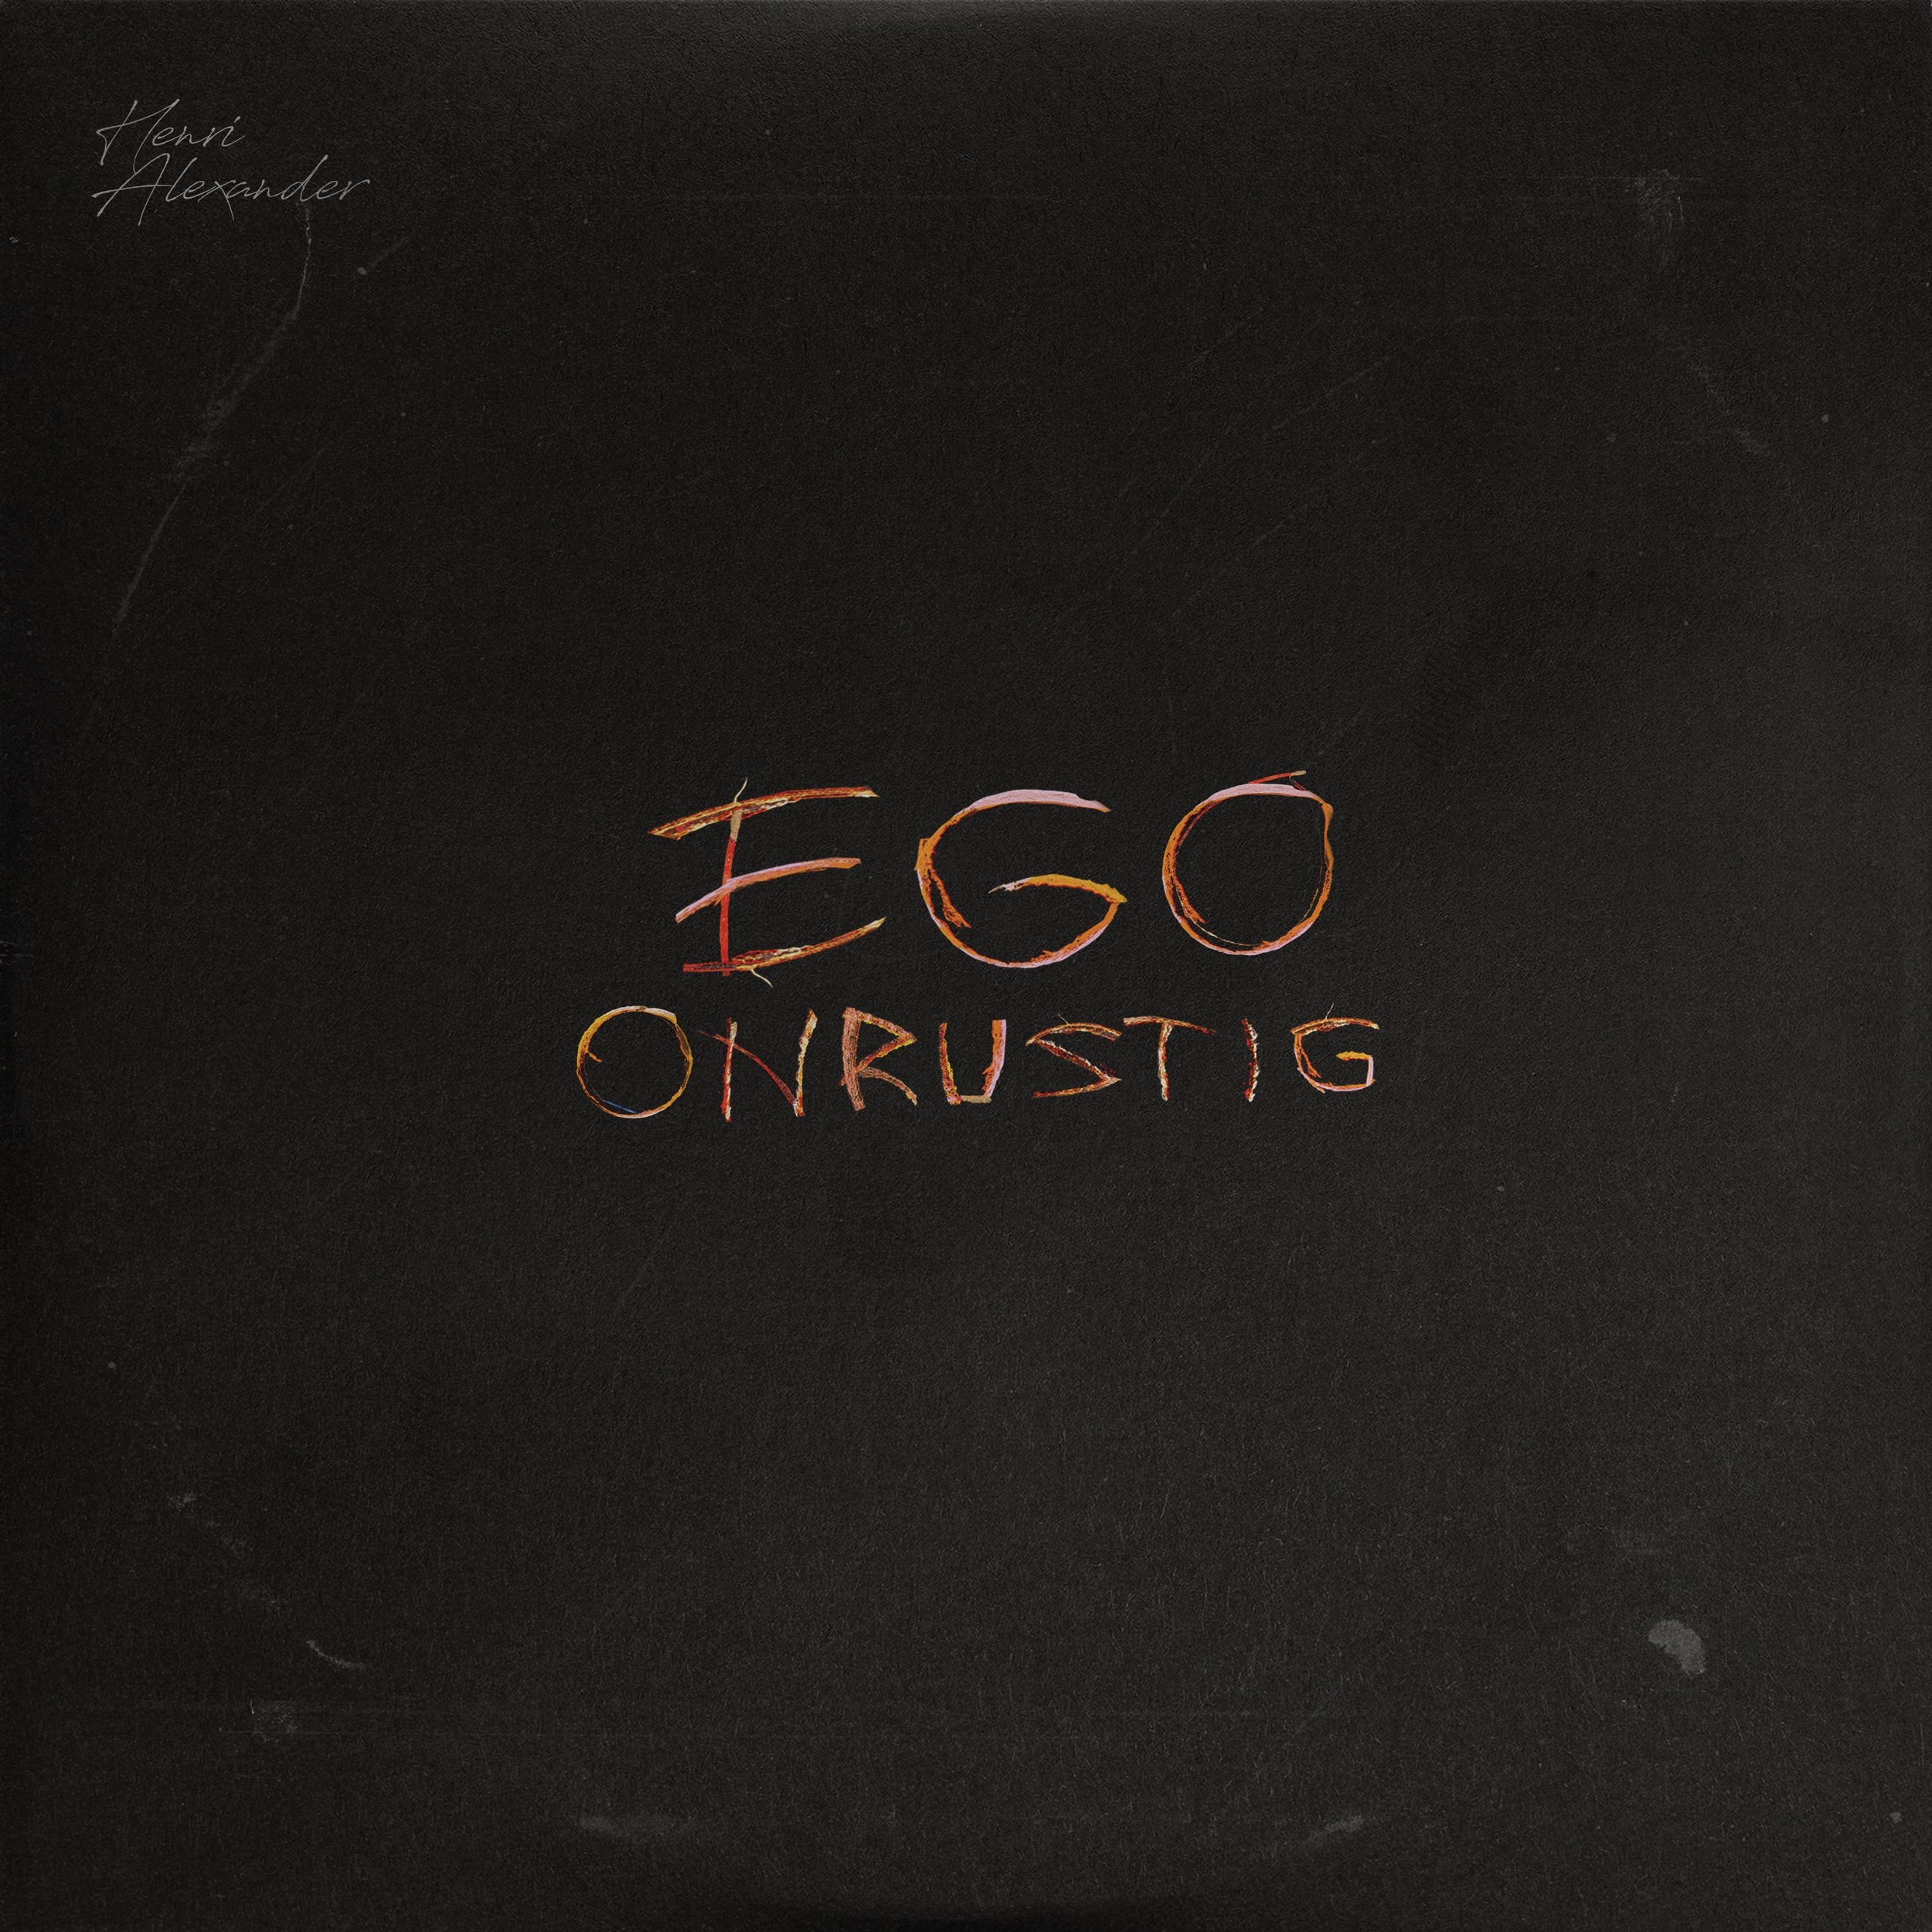 Henri Alexander - Ego Onrustig Cover [FINAL]-min.jpg